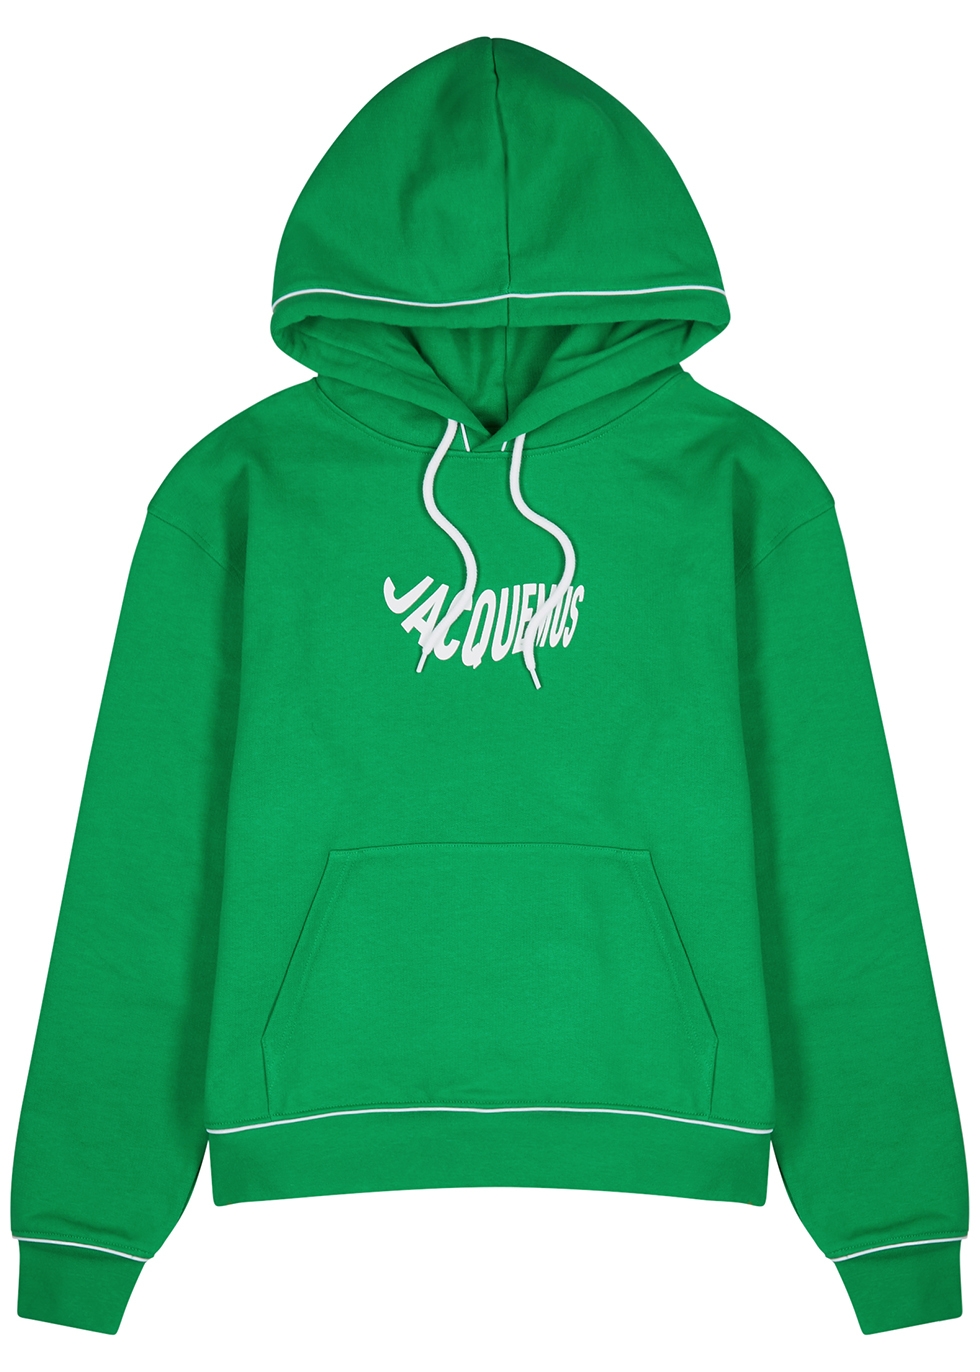 Le Sweatshirt Vague green hooded cotton sweatshirt